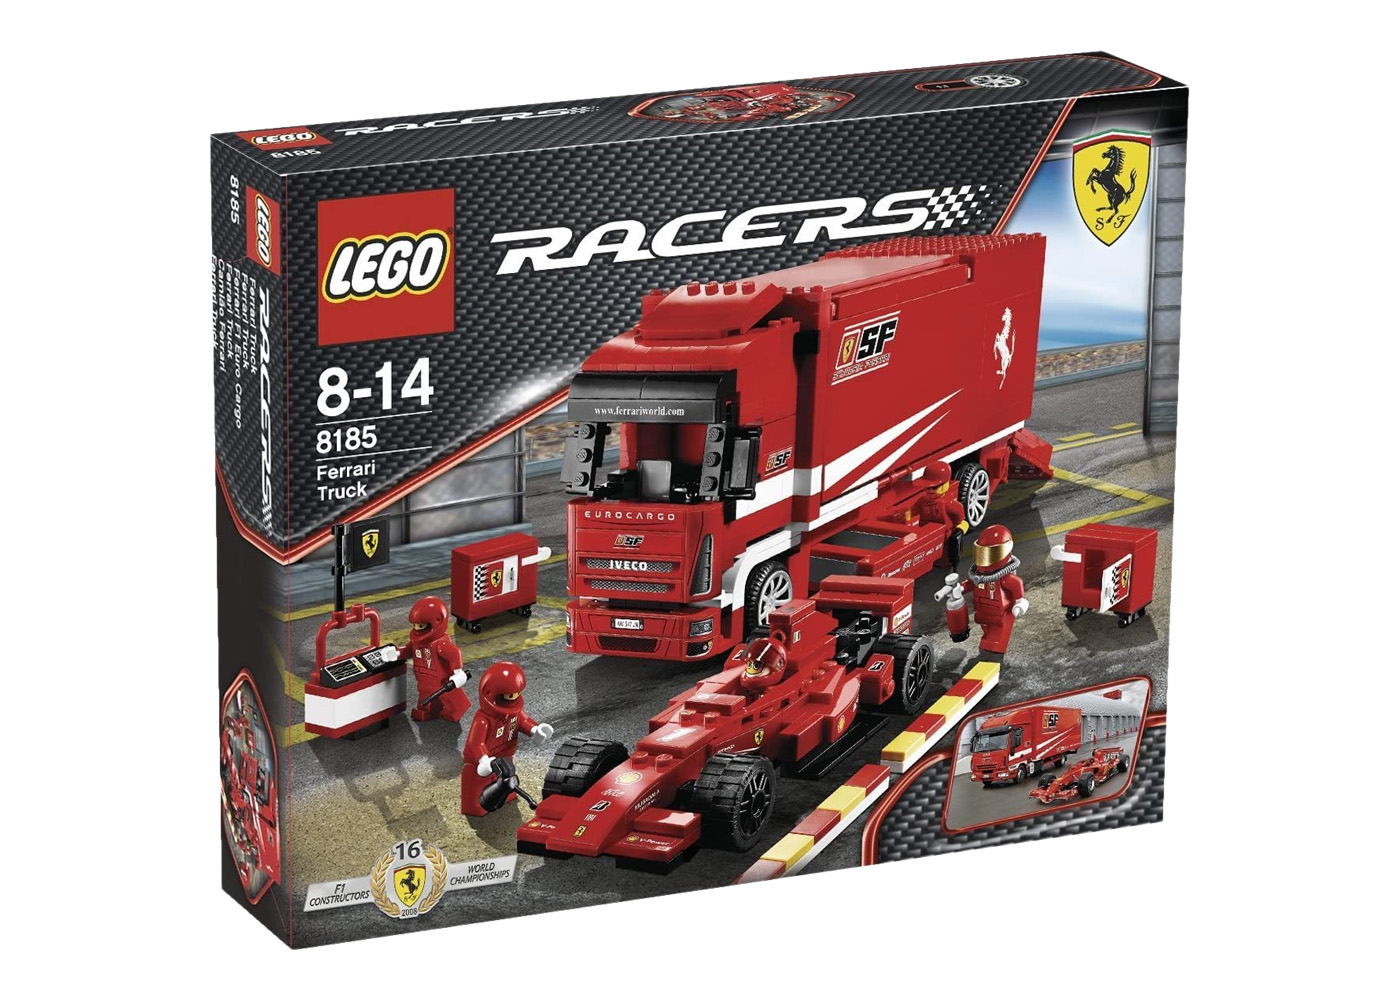 LEGO Racers Wing Jumper Set 8166 - GB